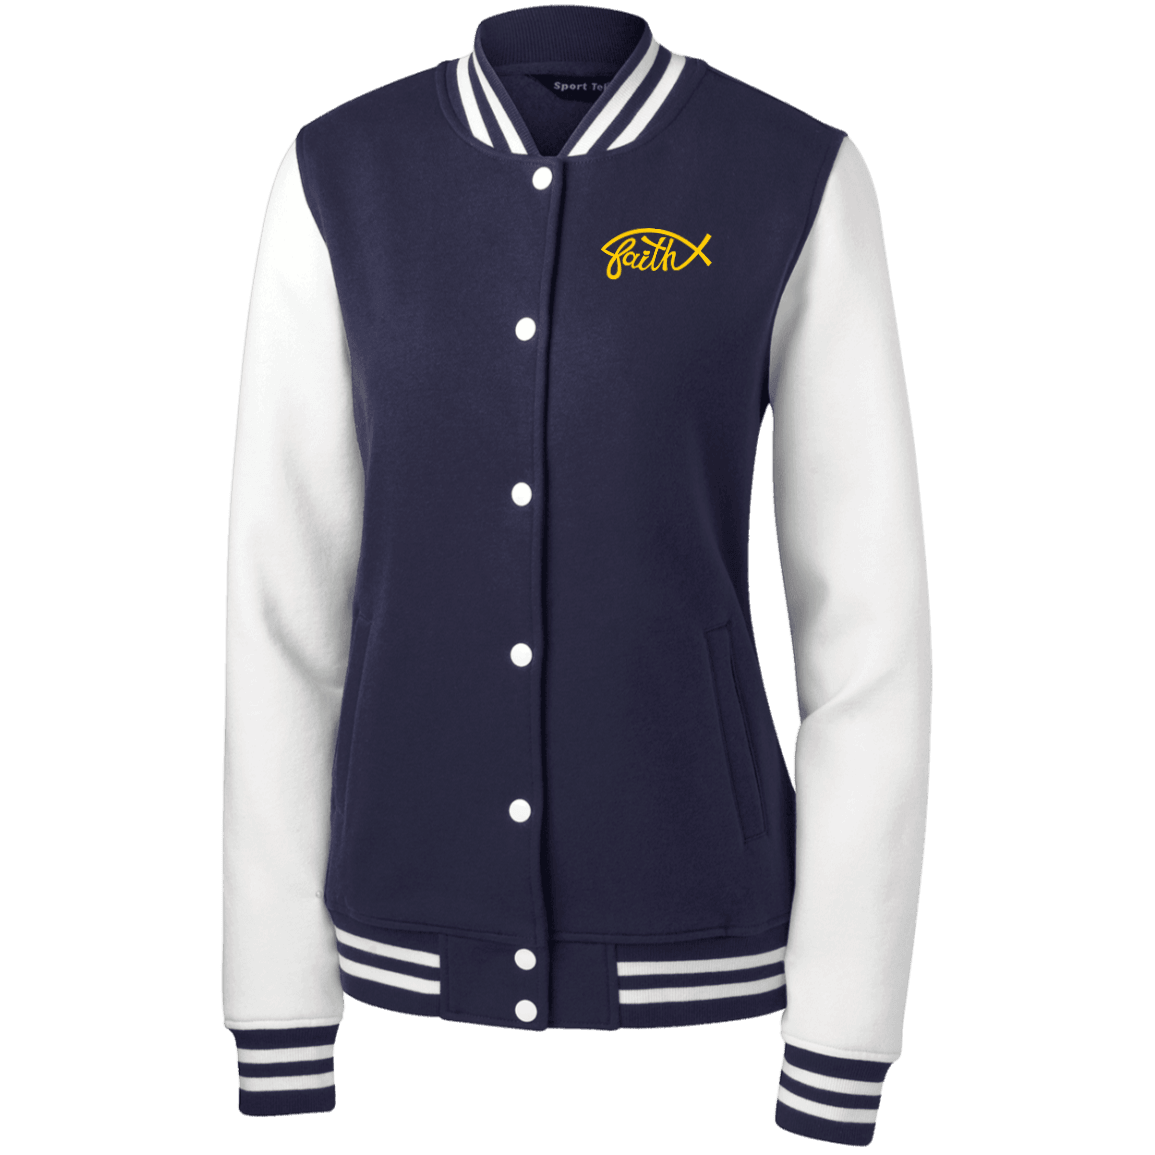 Designs by MyUtopia Shout Out:Faith Fish Embroidered Sport-Tek Women's Fleece Letterman Jacket - Navy Blue,True Navy/White / X-Small,Sweatshirts